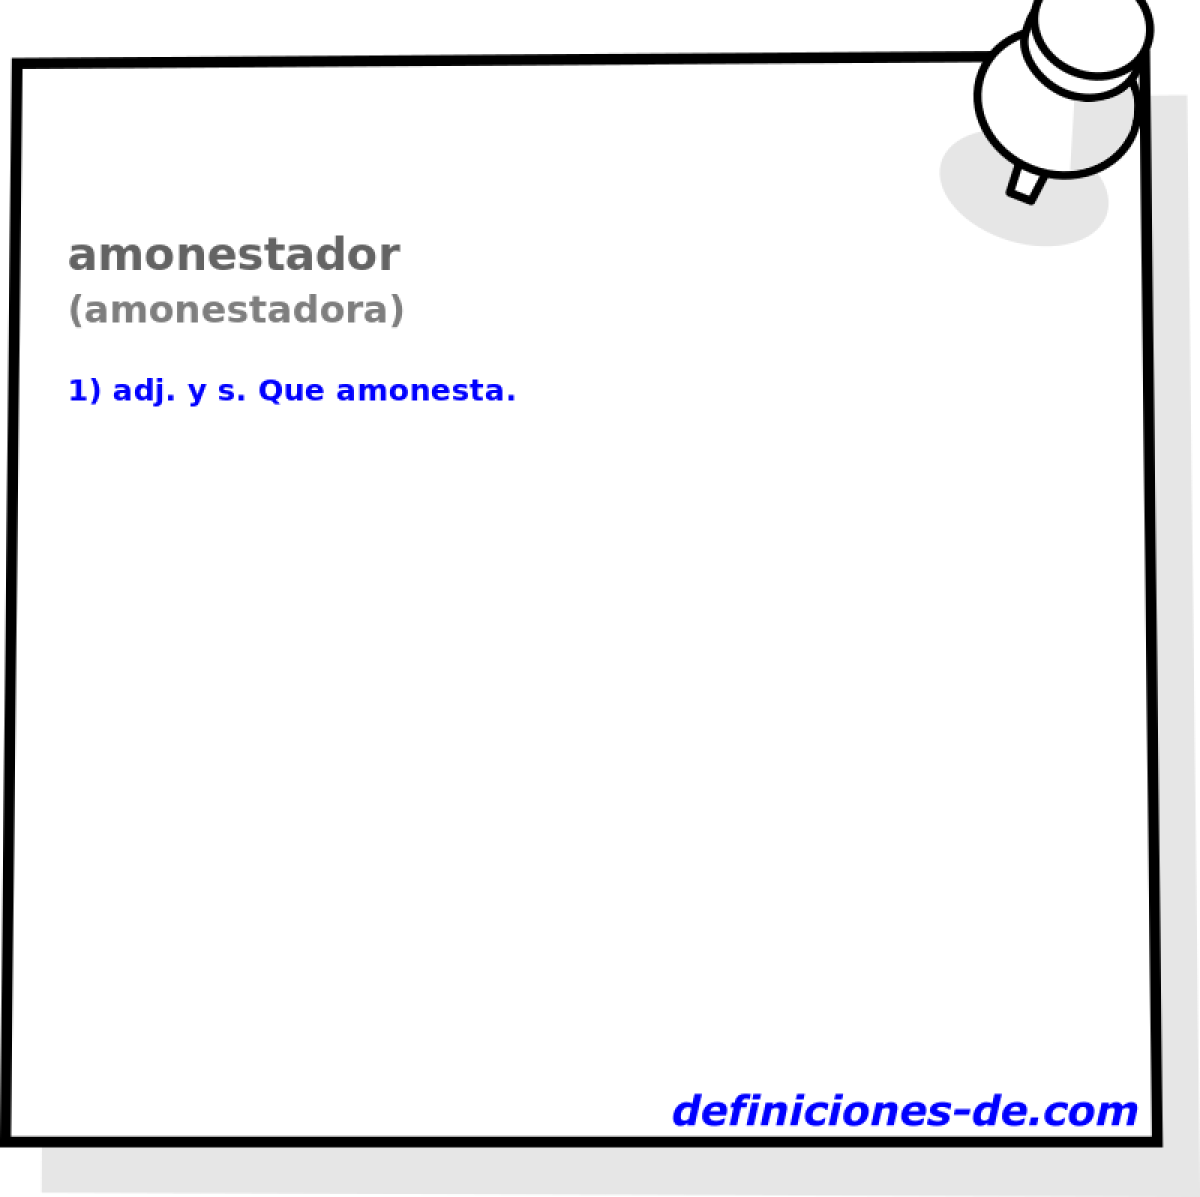 amonestador (amonestadora)